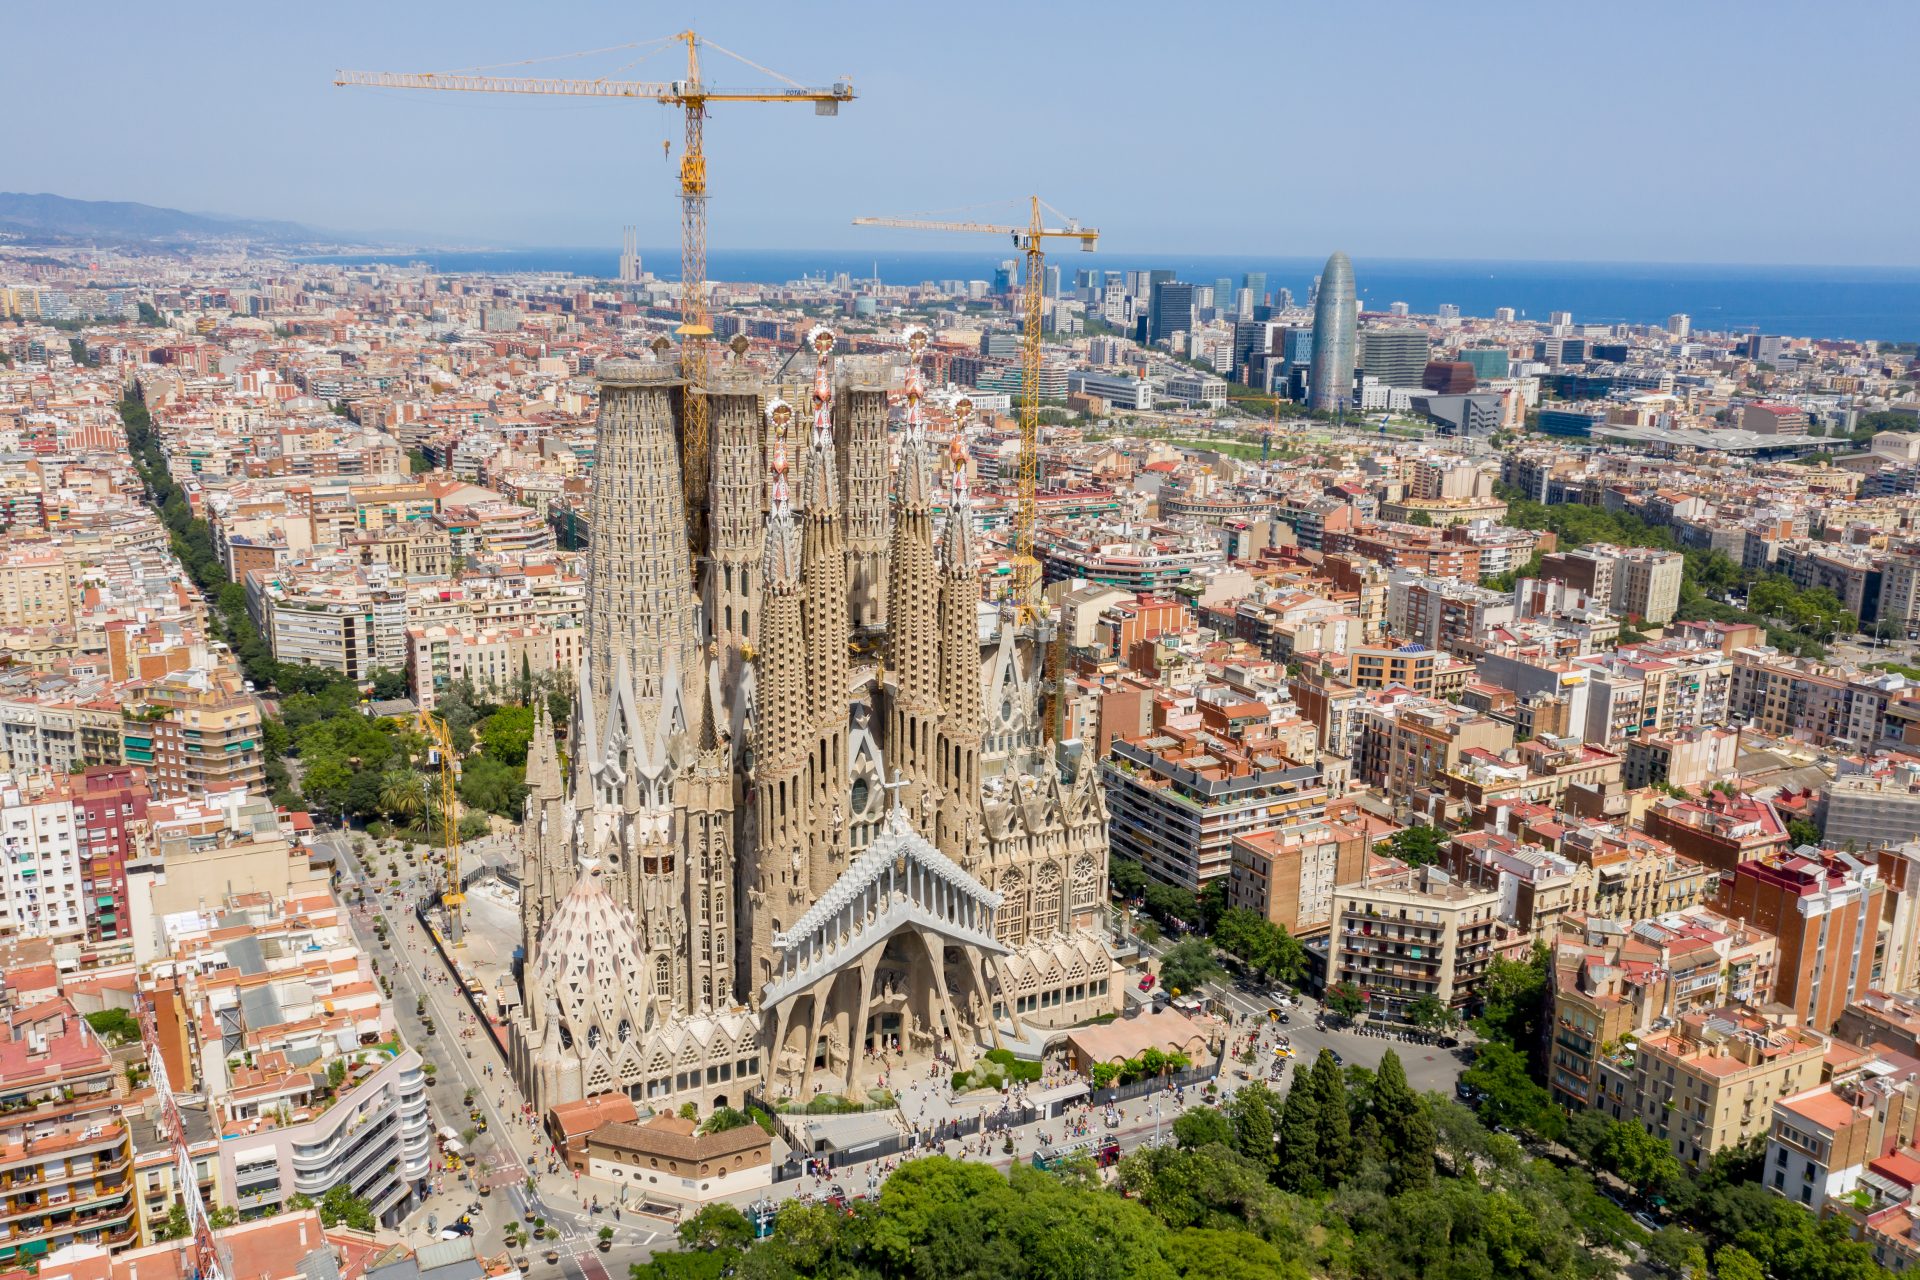 Architect Antoni Gaudí